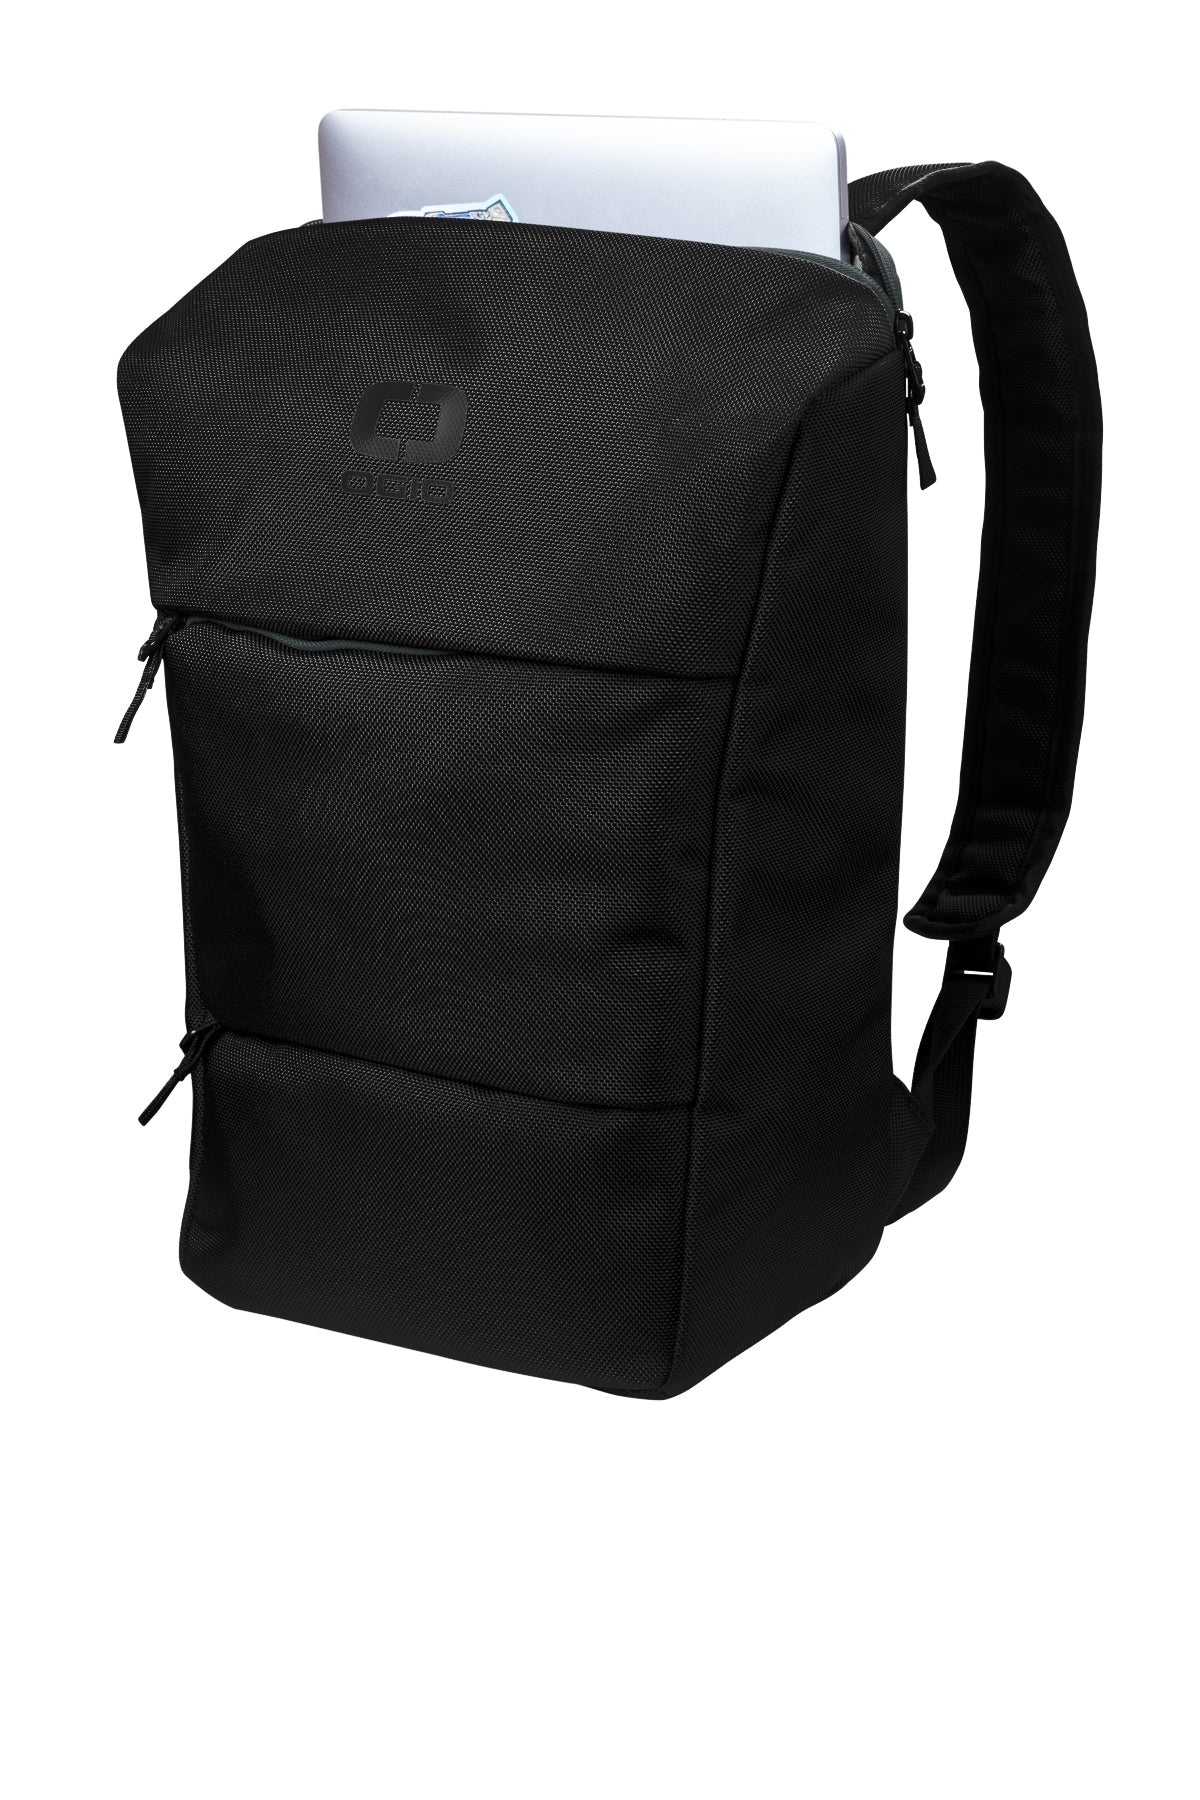 OGIO Sprint Customzied Backpacks, Blacktop